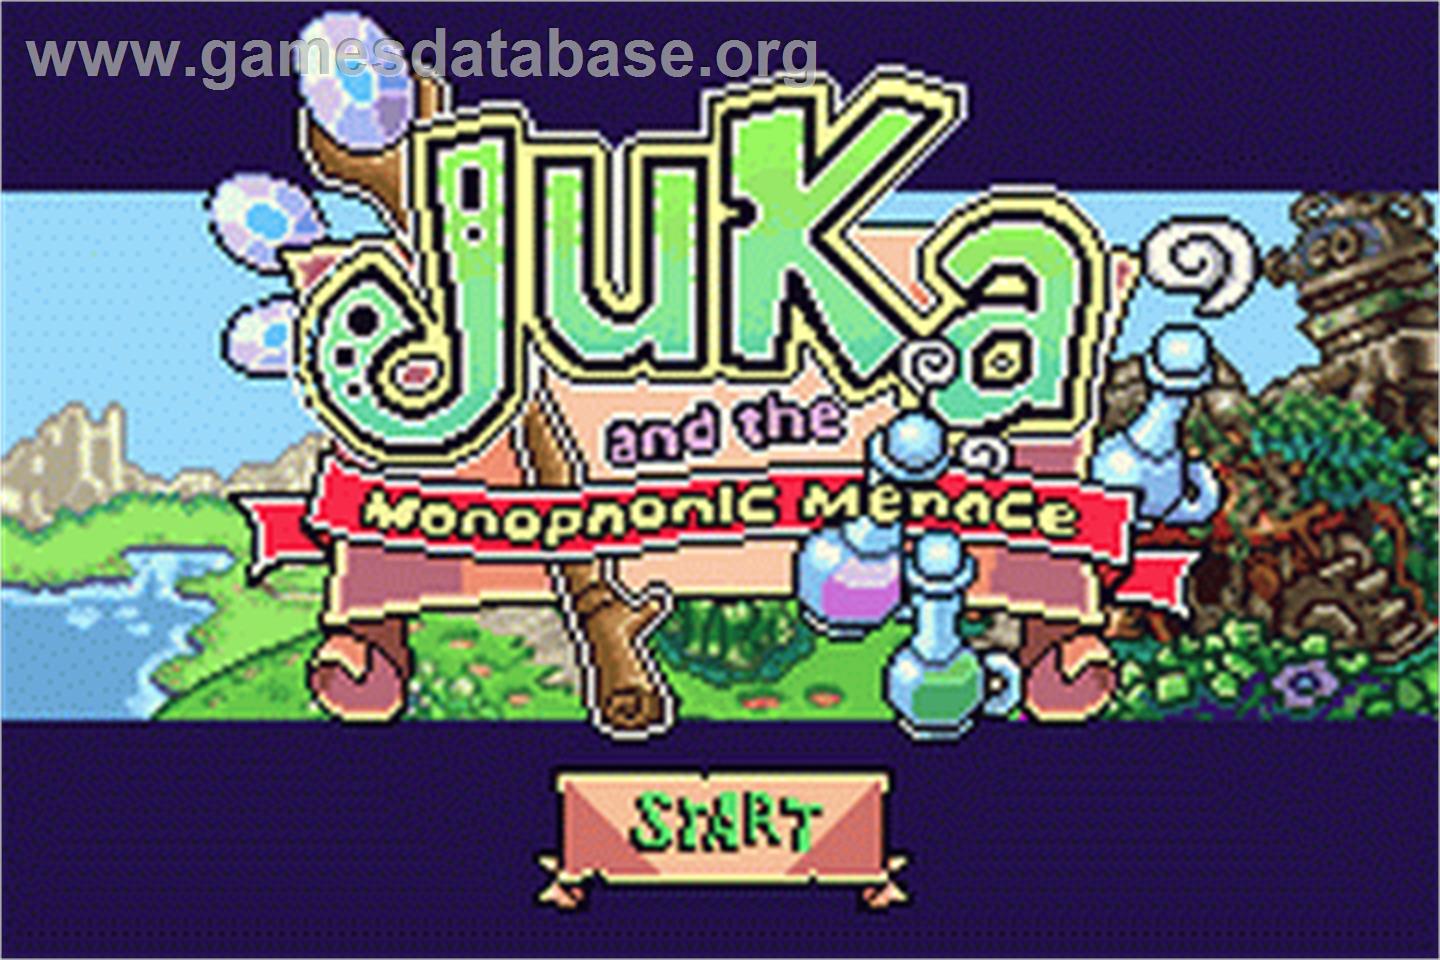 Juka and the Monophonic Menace - Nintendo Game Boy Advance - Artwork - Title Screen